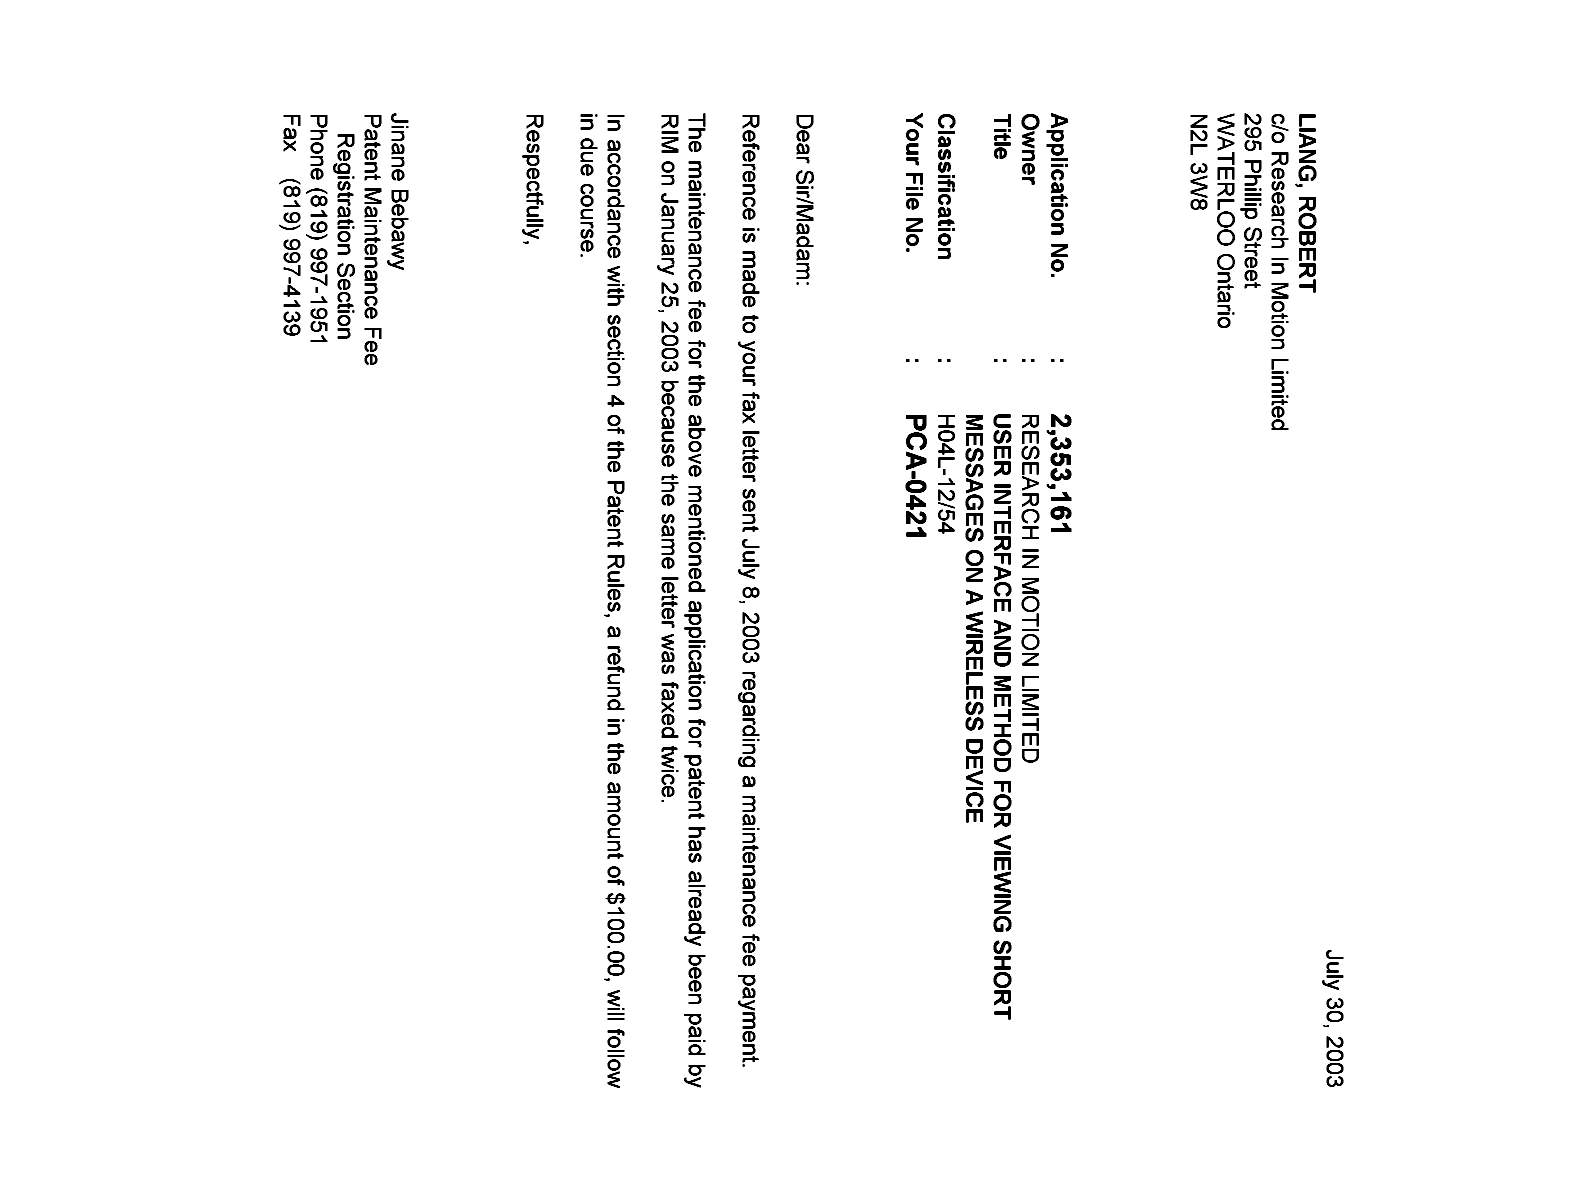 Canadian Patent Document 2353161. Correspondence 20030730. Image 1 of 1